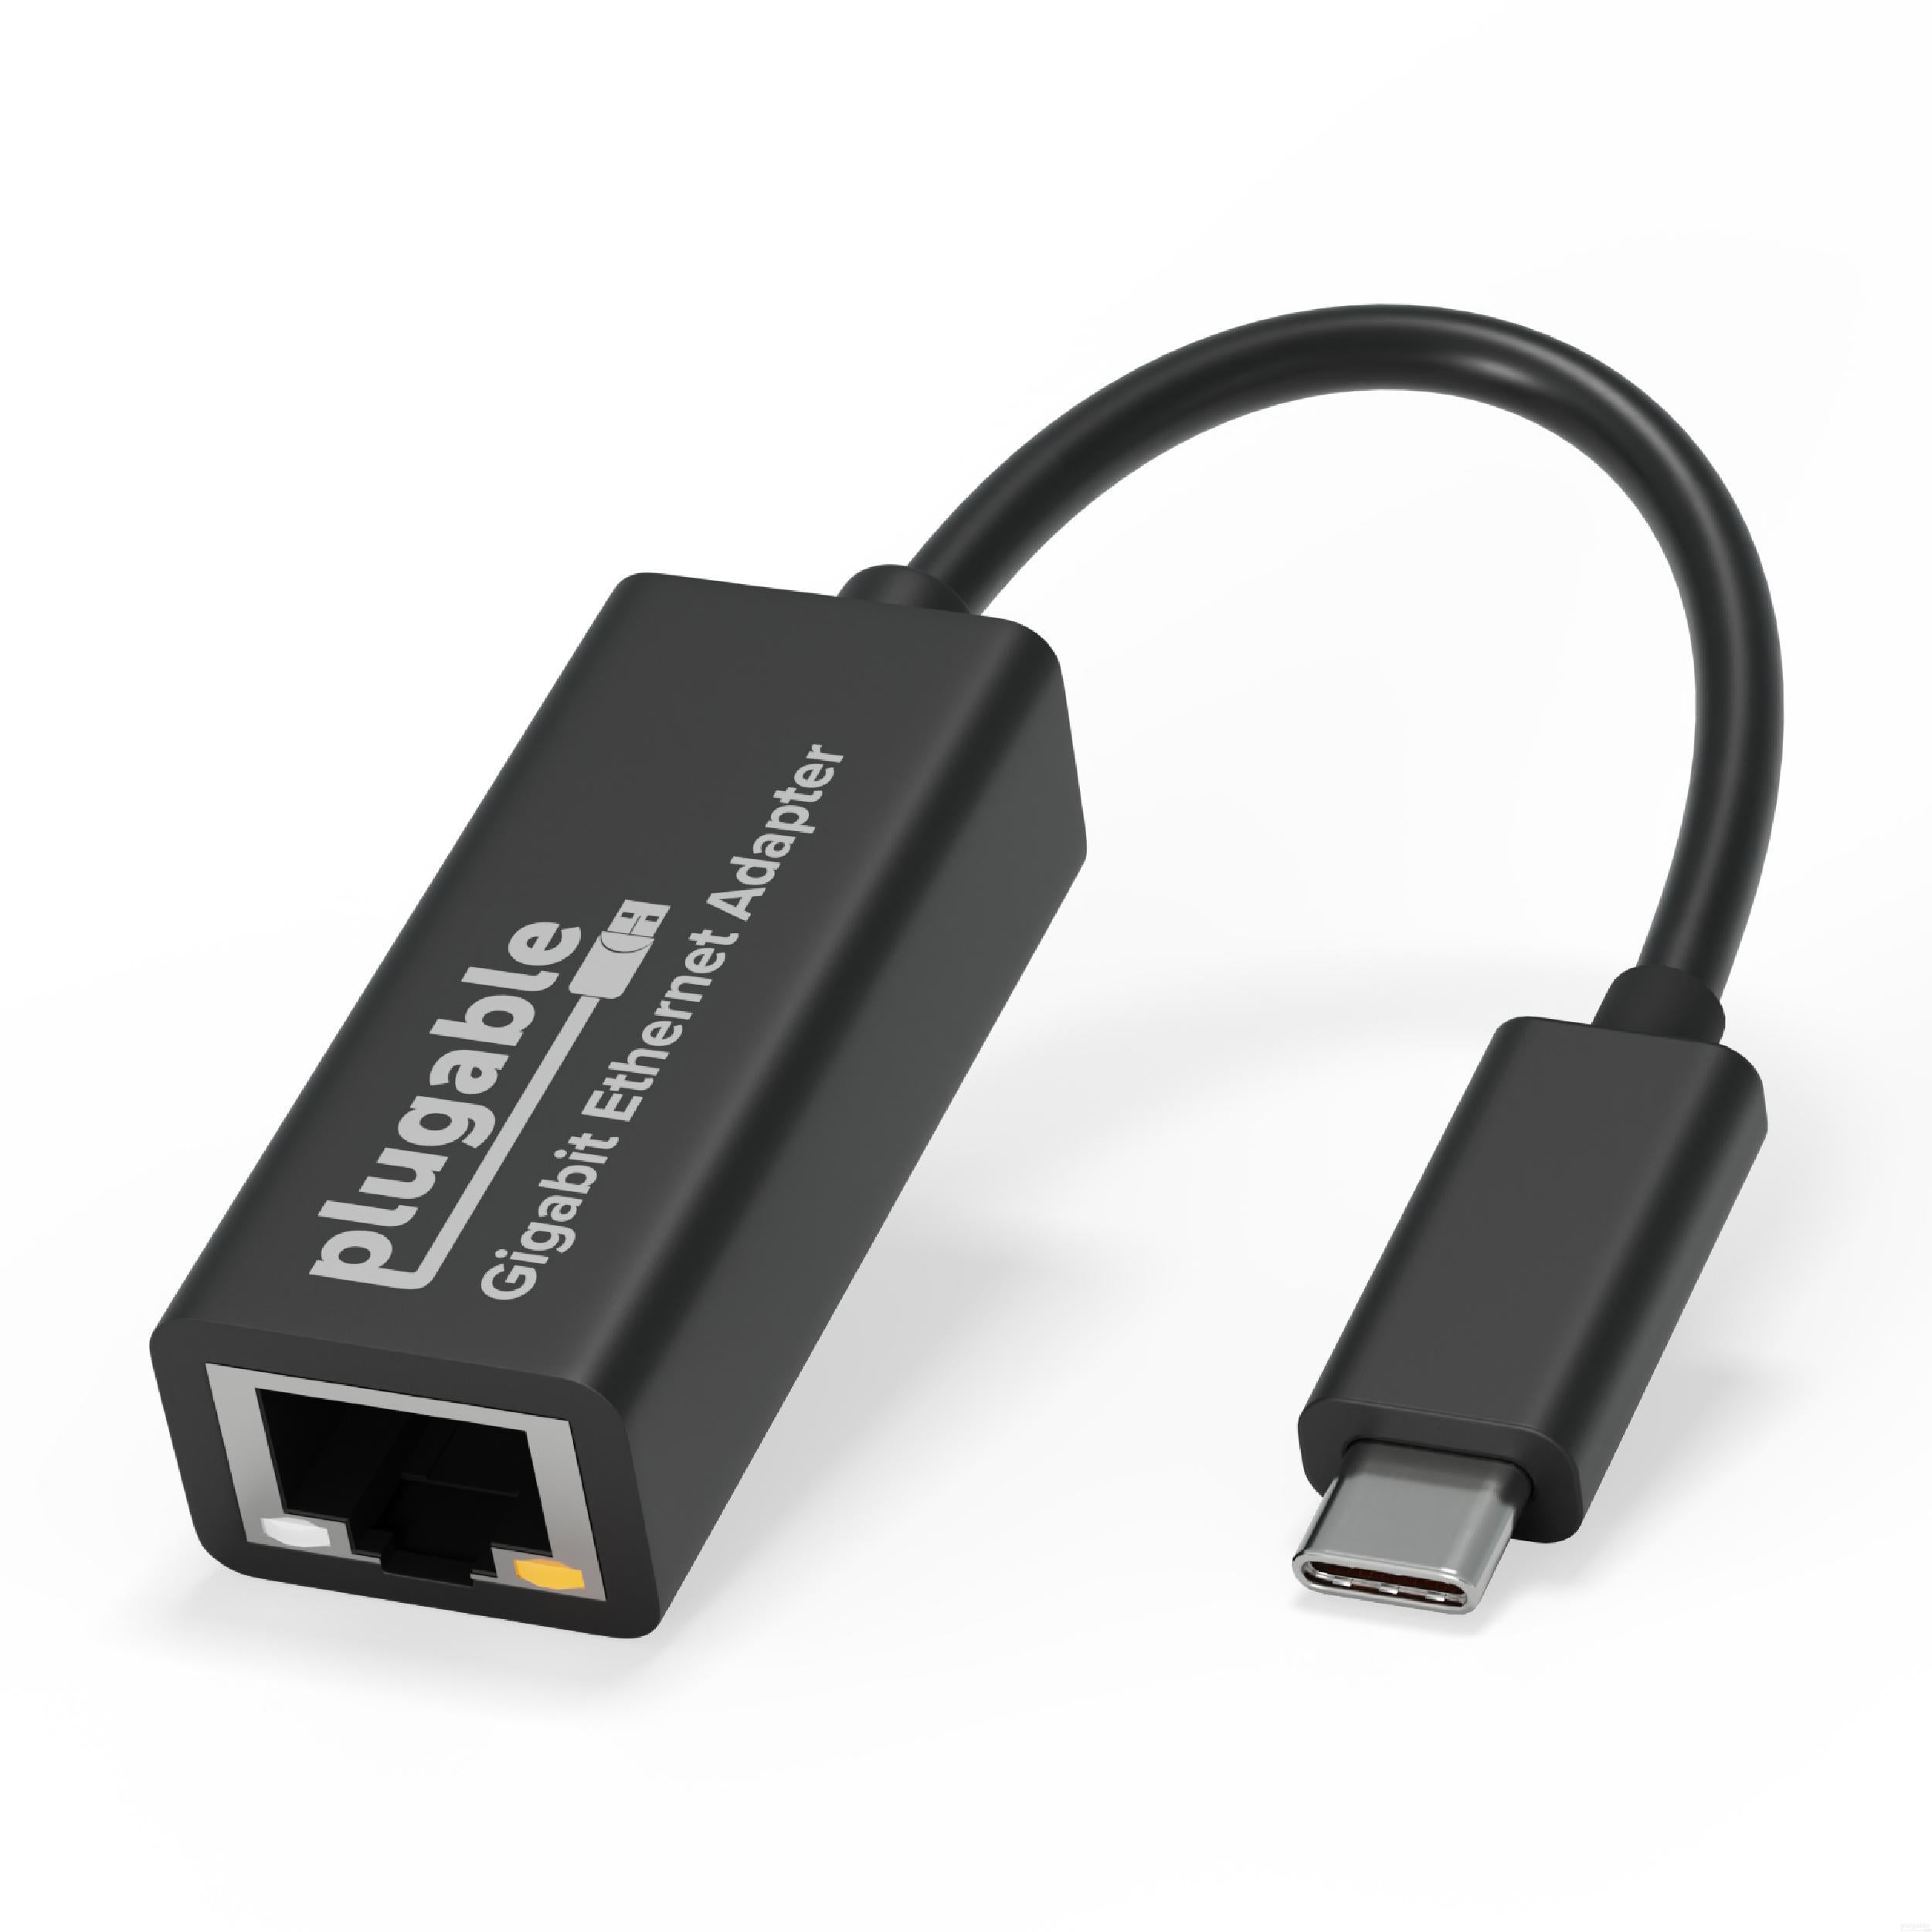 USB-C to Gigabit Ethernet Adapter